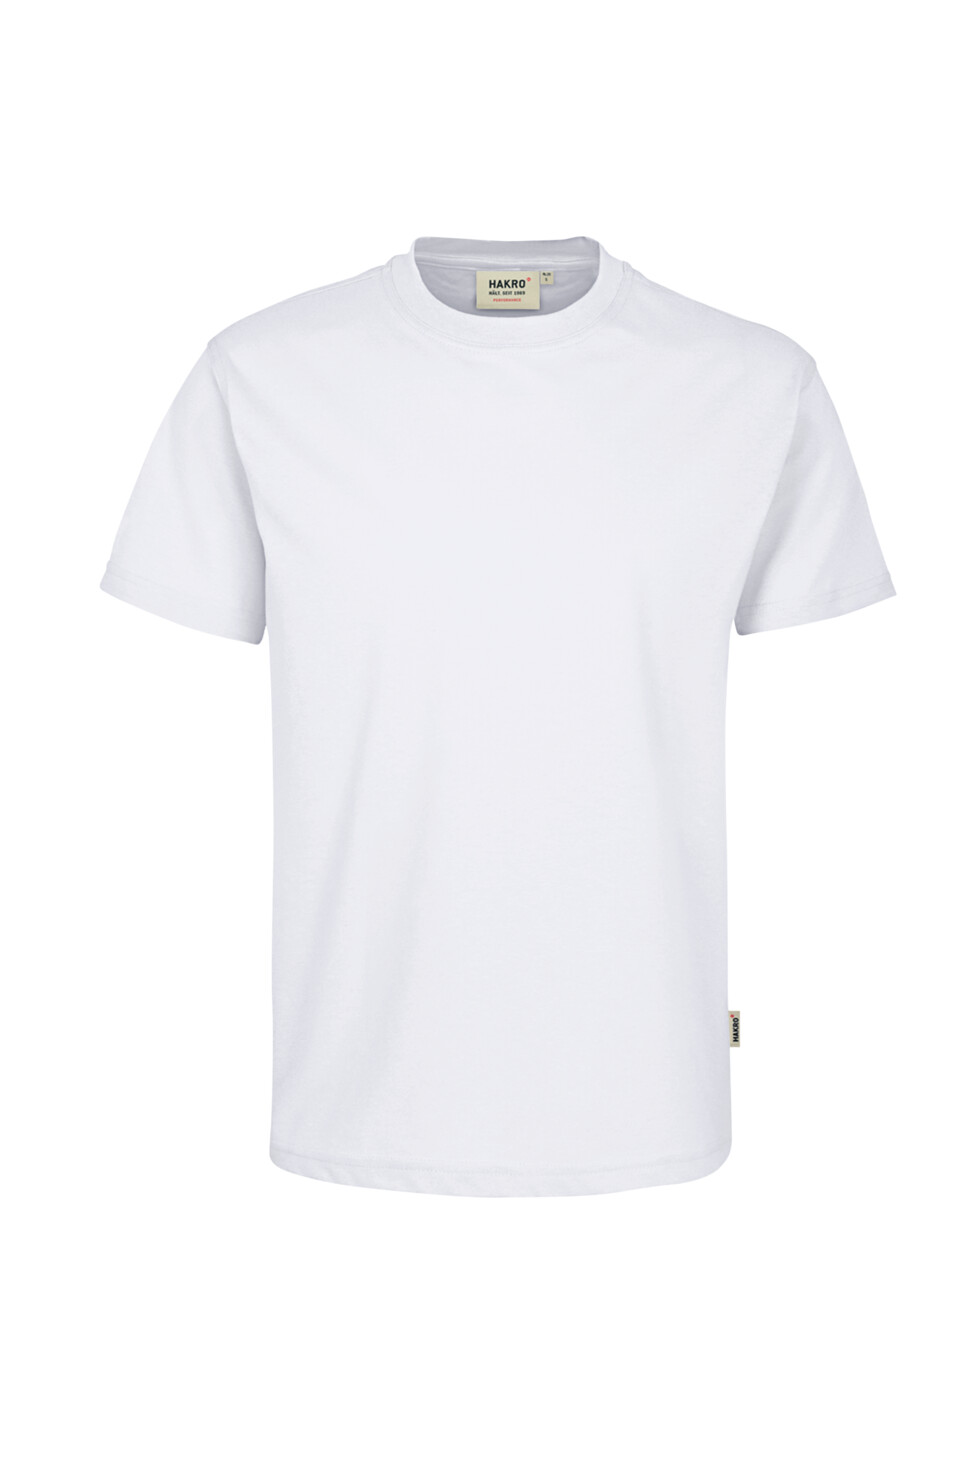 Hakro Herren T-Shirt Performance, Weiß